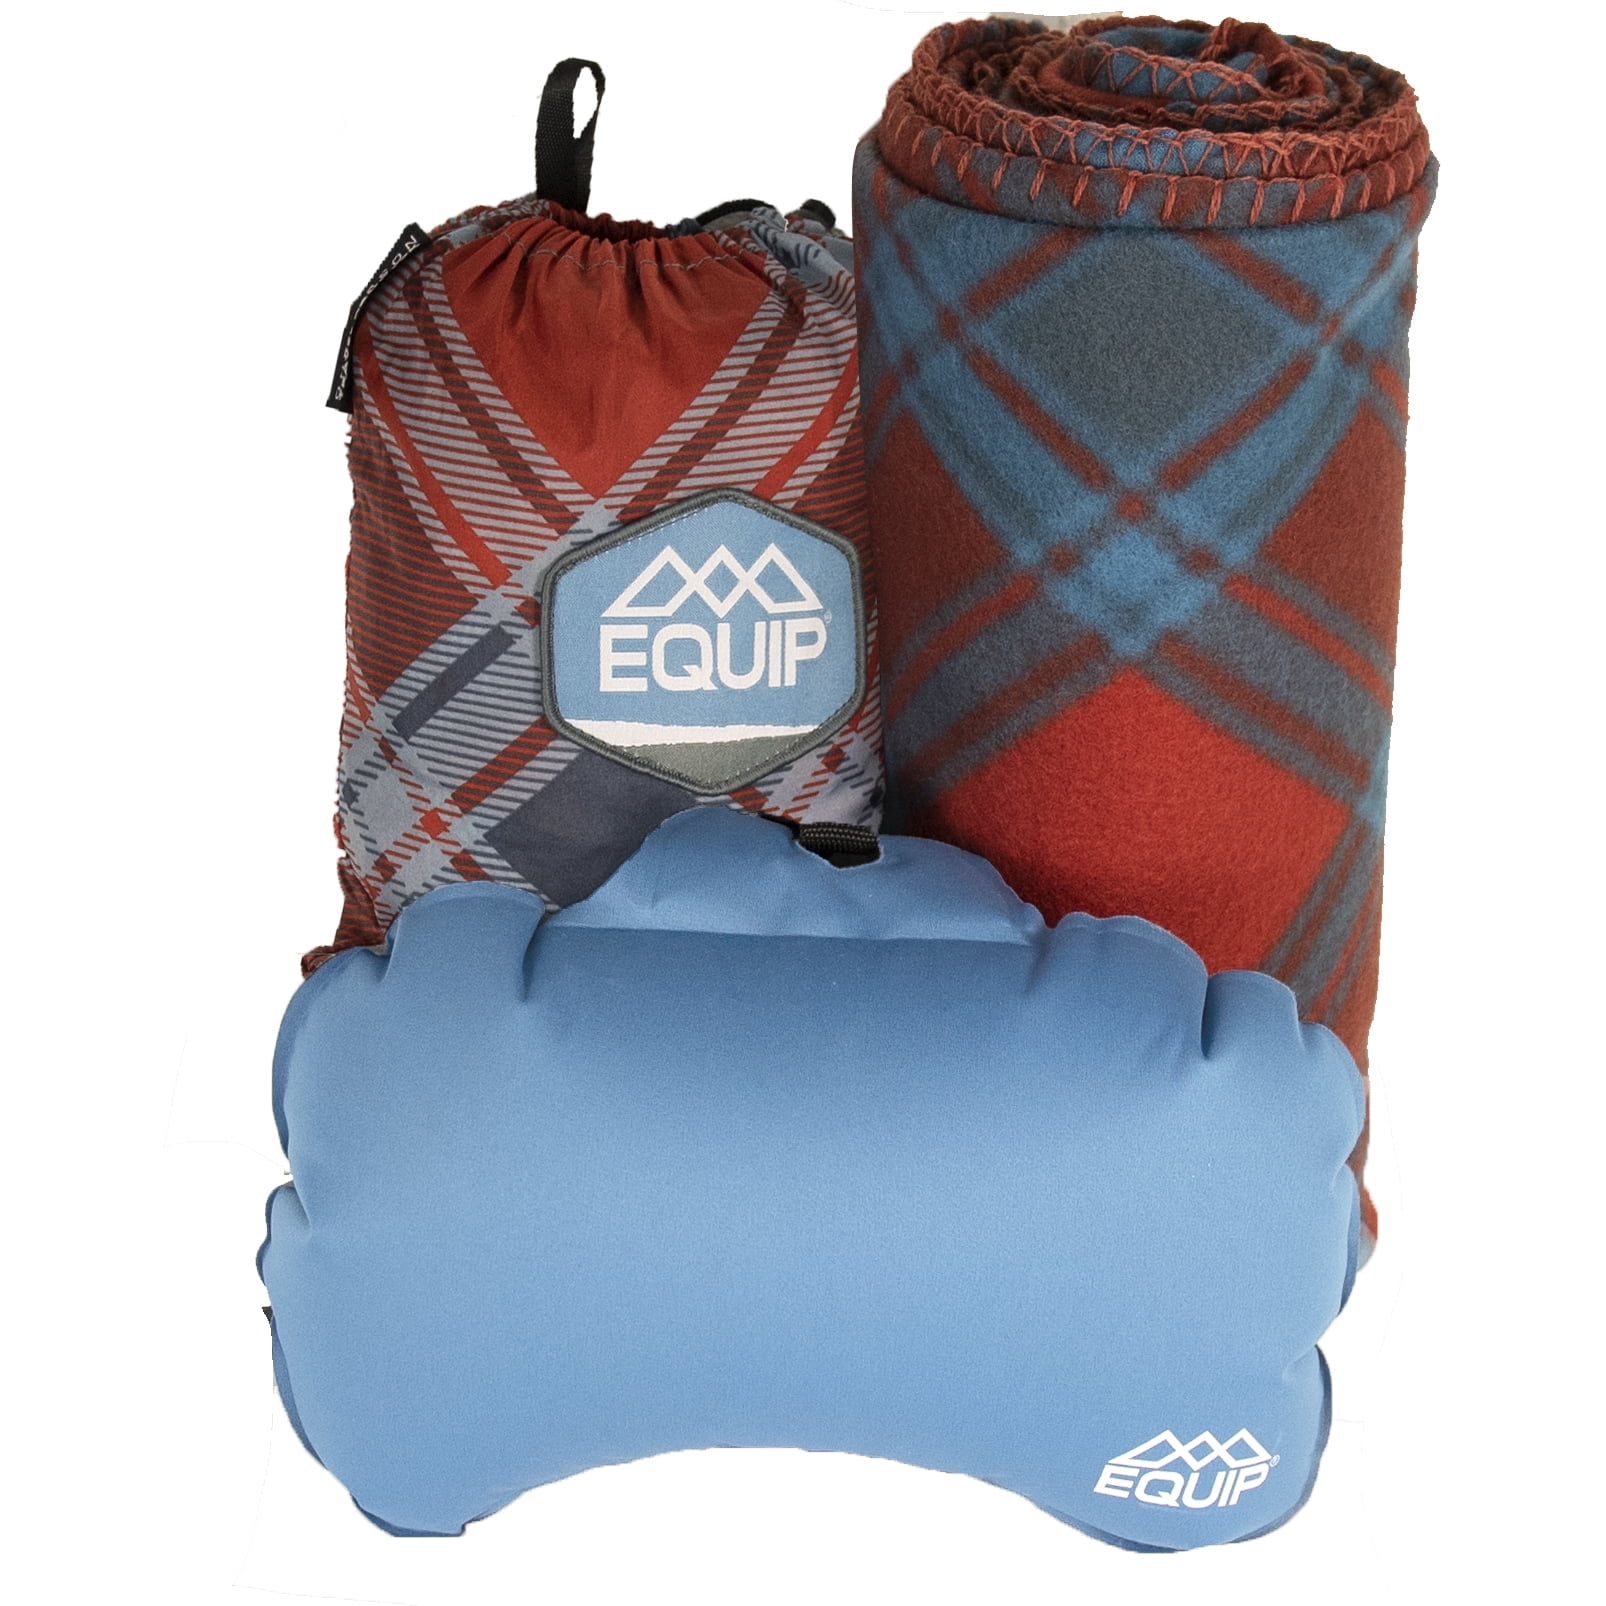 3-Piece Equip Hammock, Fleece Blanket & Inflatable Pillow (Blue & Orange Plaid) $9.98 + Free S&H w/ Walmart+ or $35+